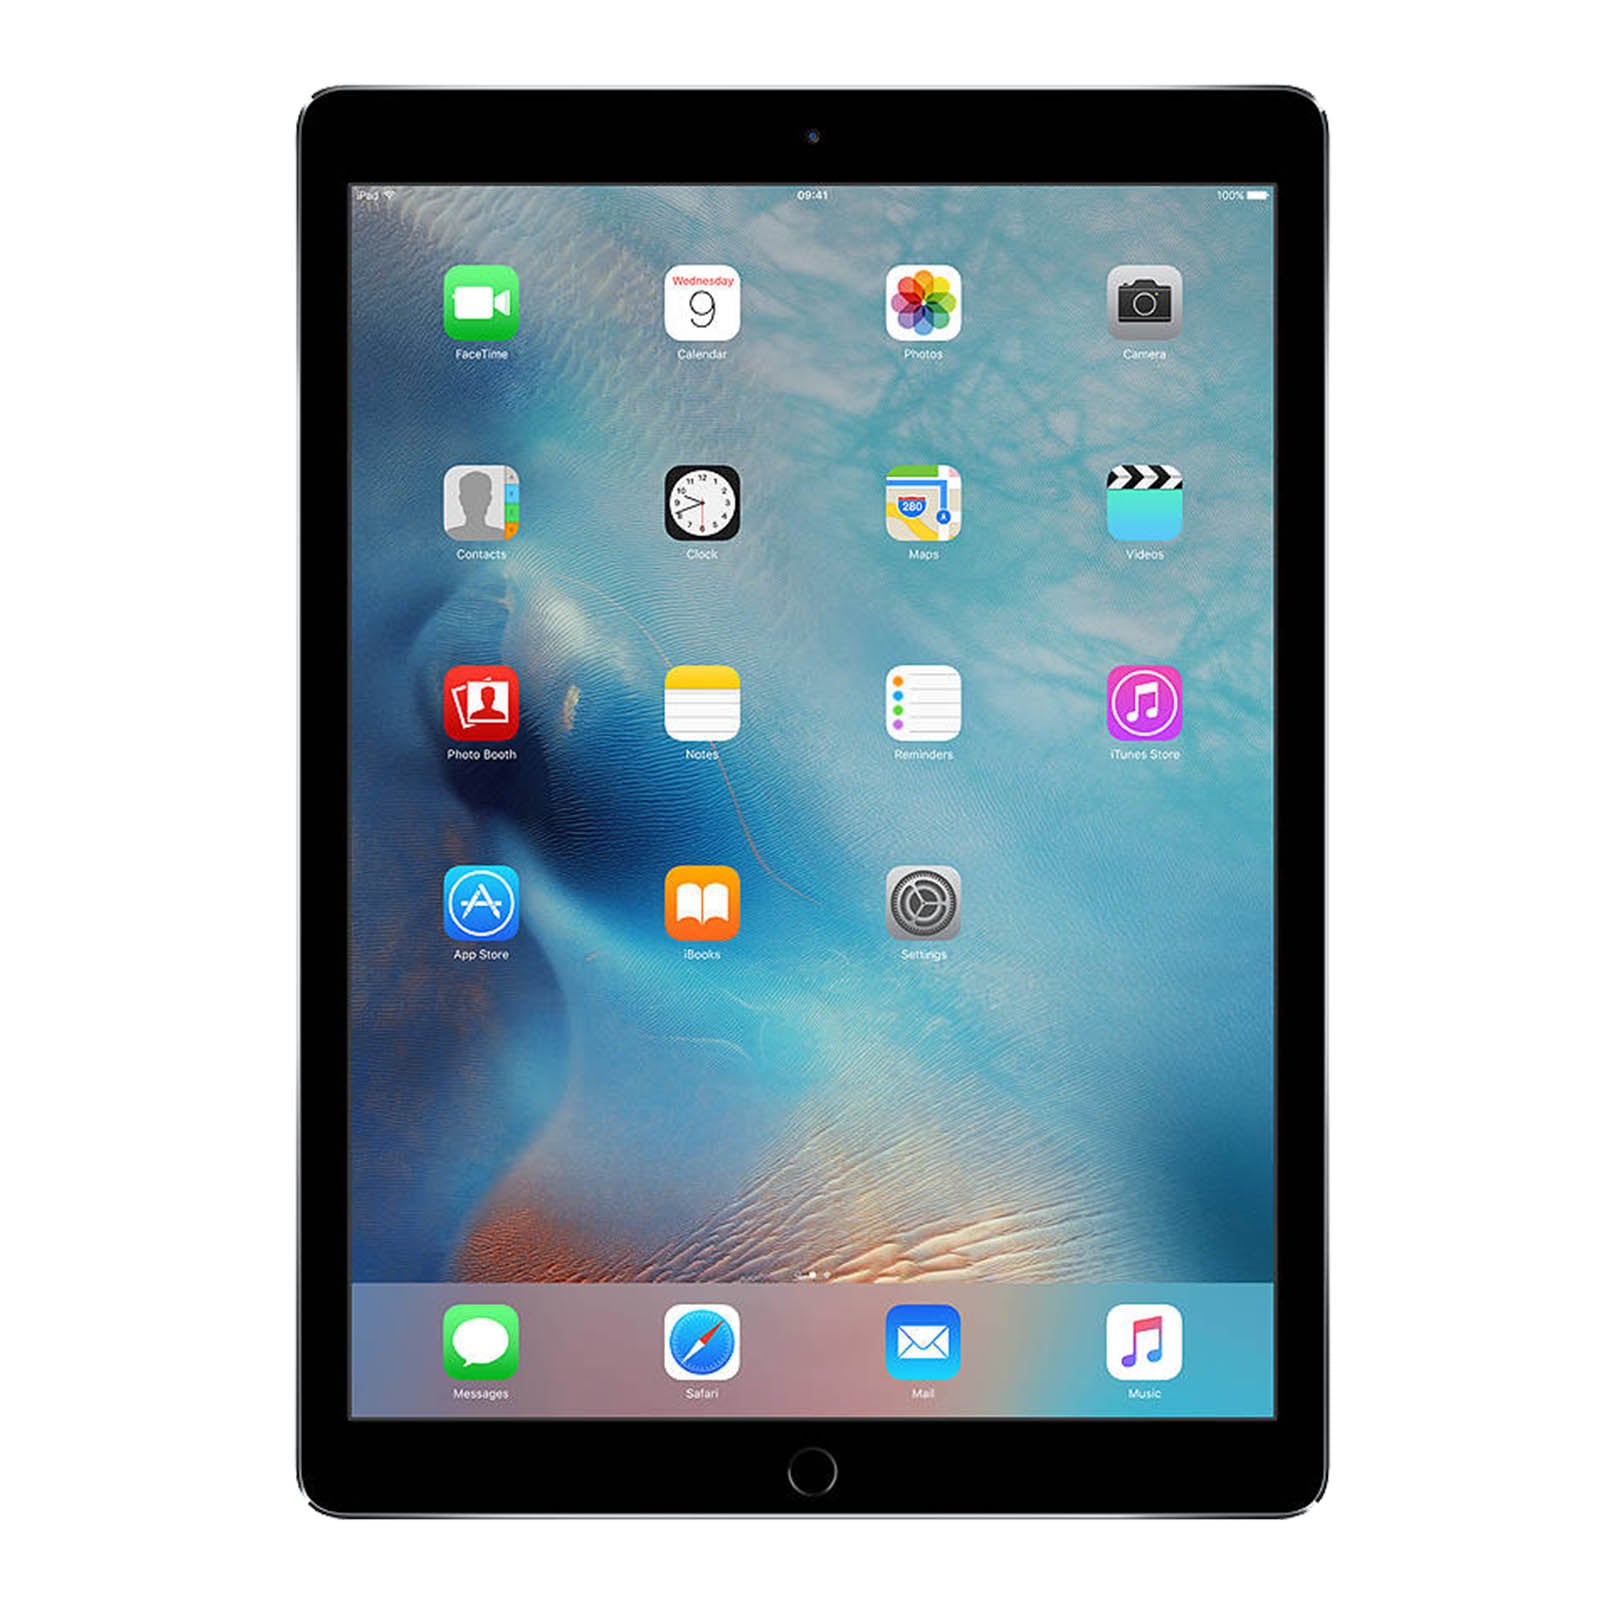 iPad Pro 12.9 Inch 2nd Gen 512GB Space Grey Good - Unlocked